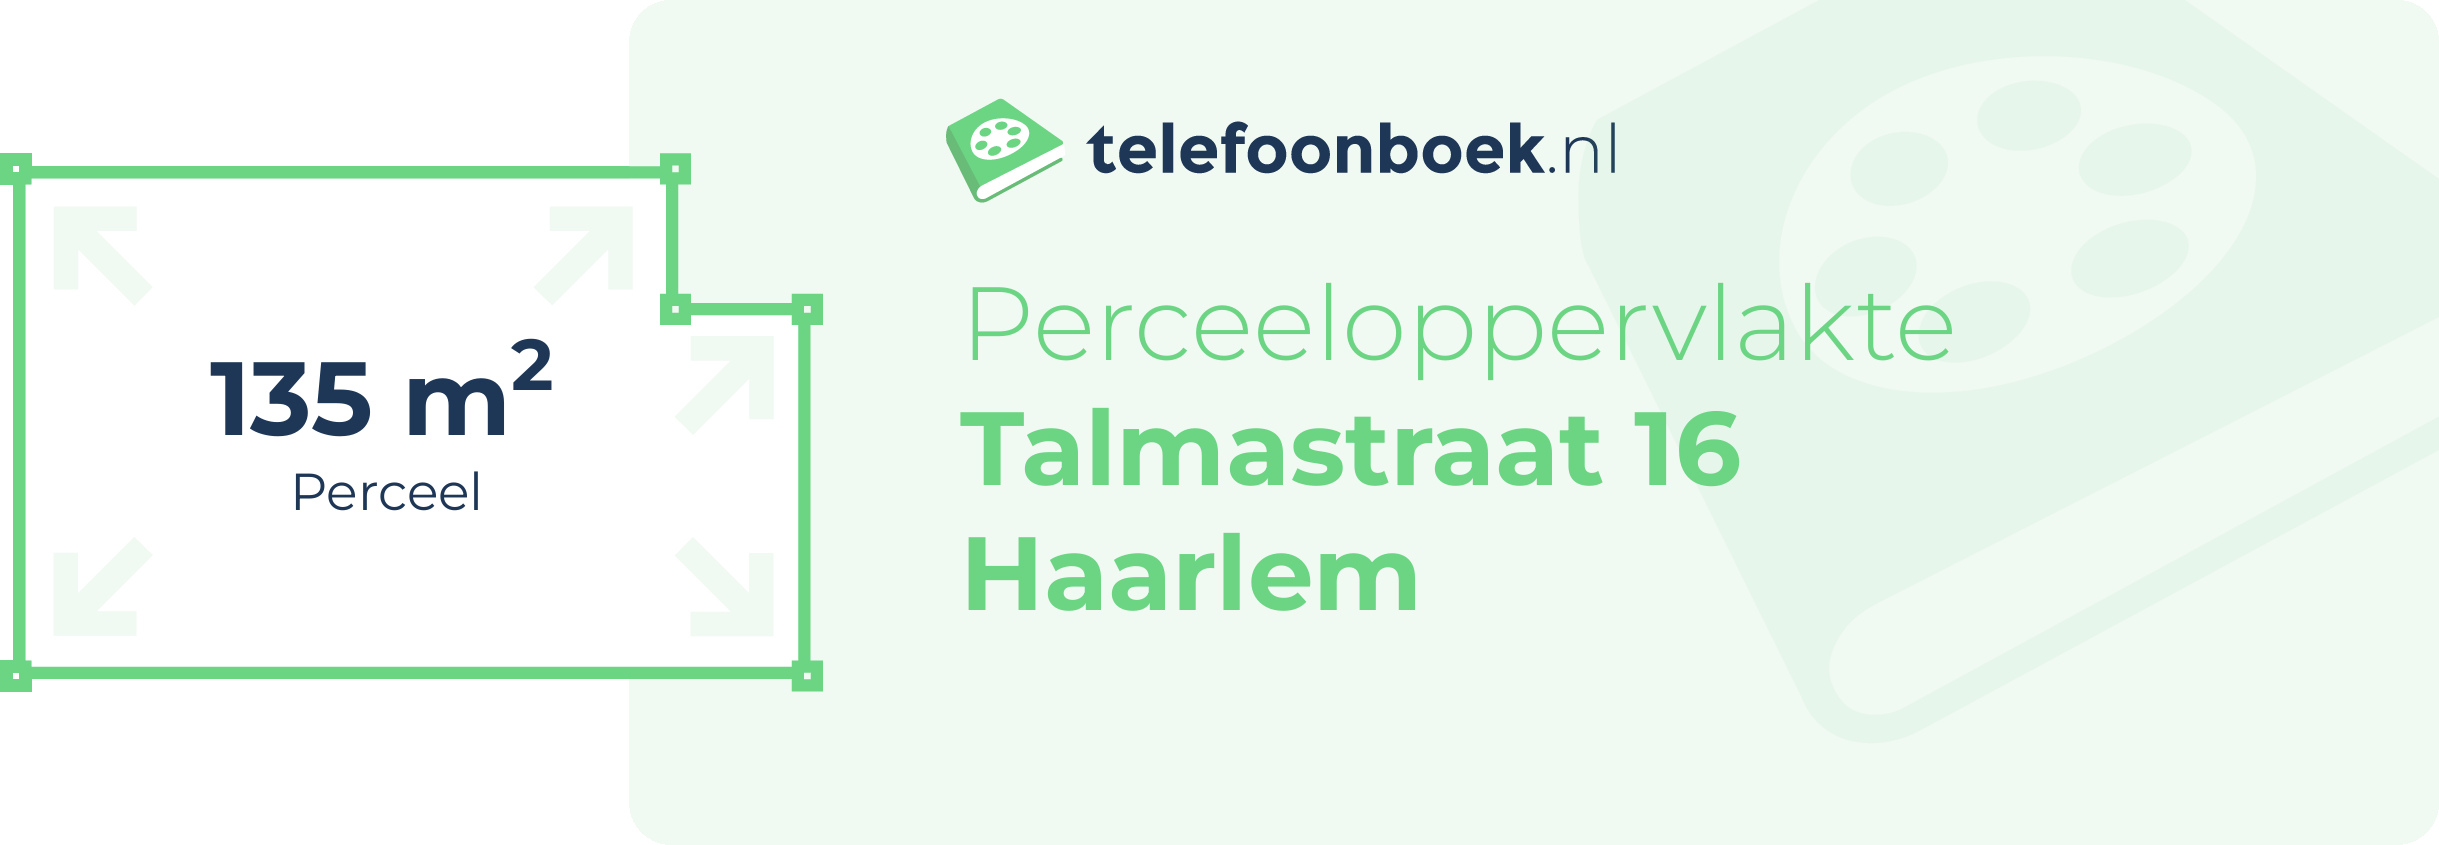 Perceeloppervlakte Talmastraat 16 Haarlem